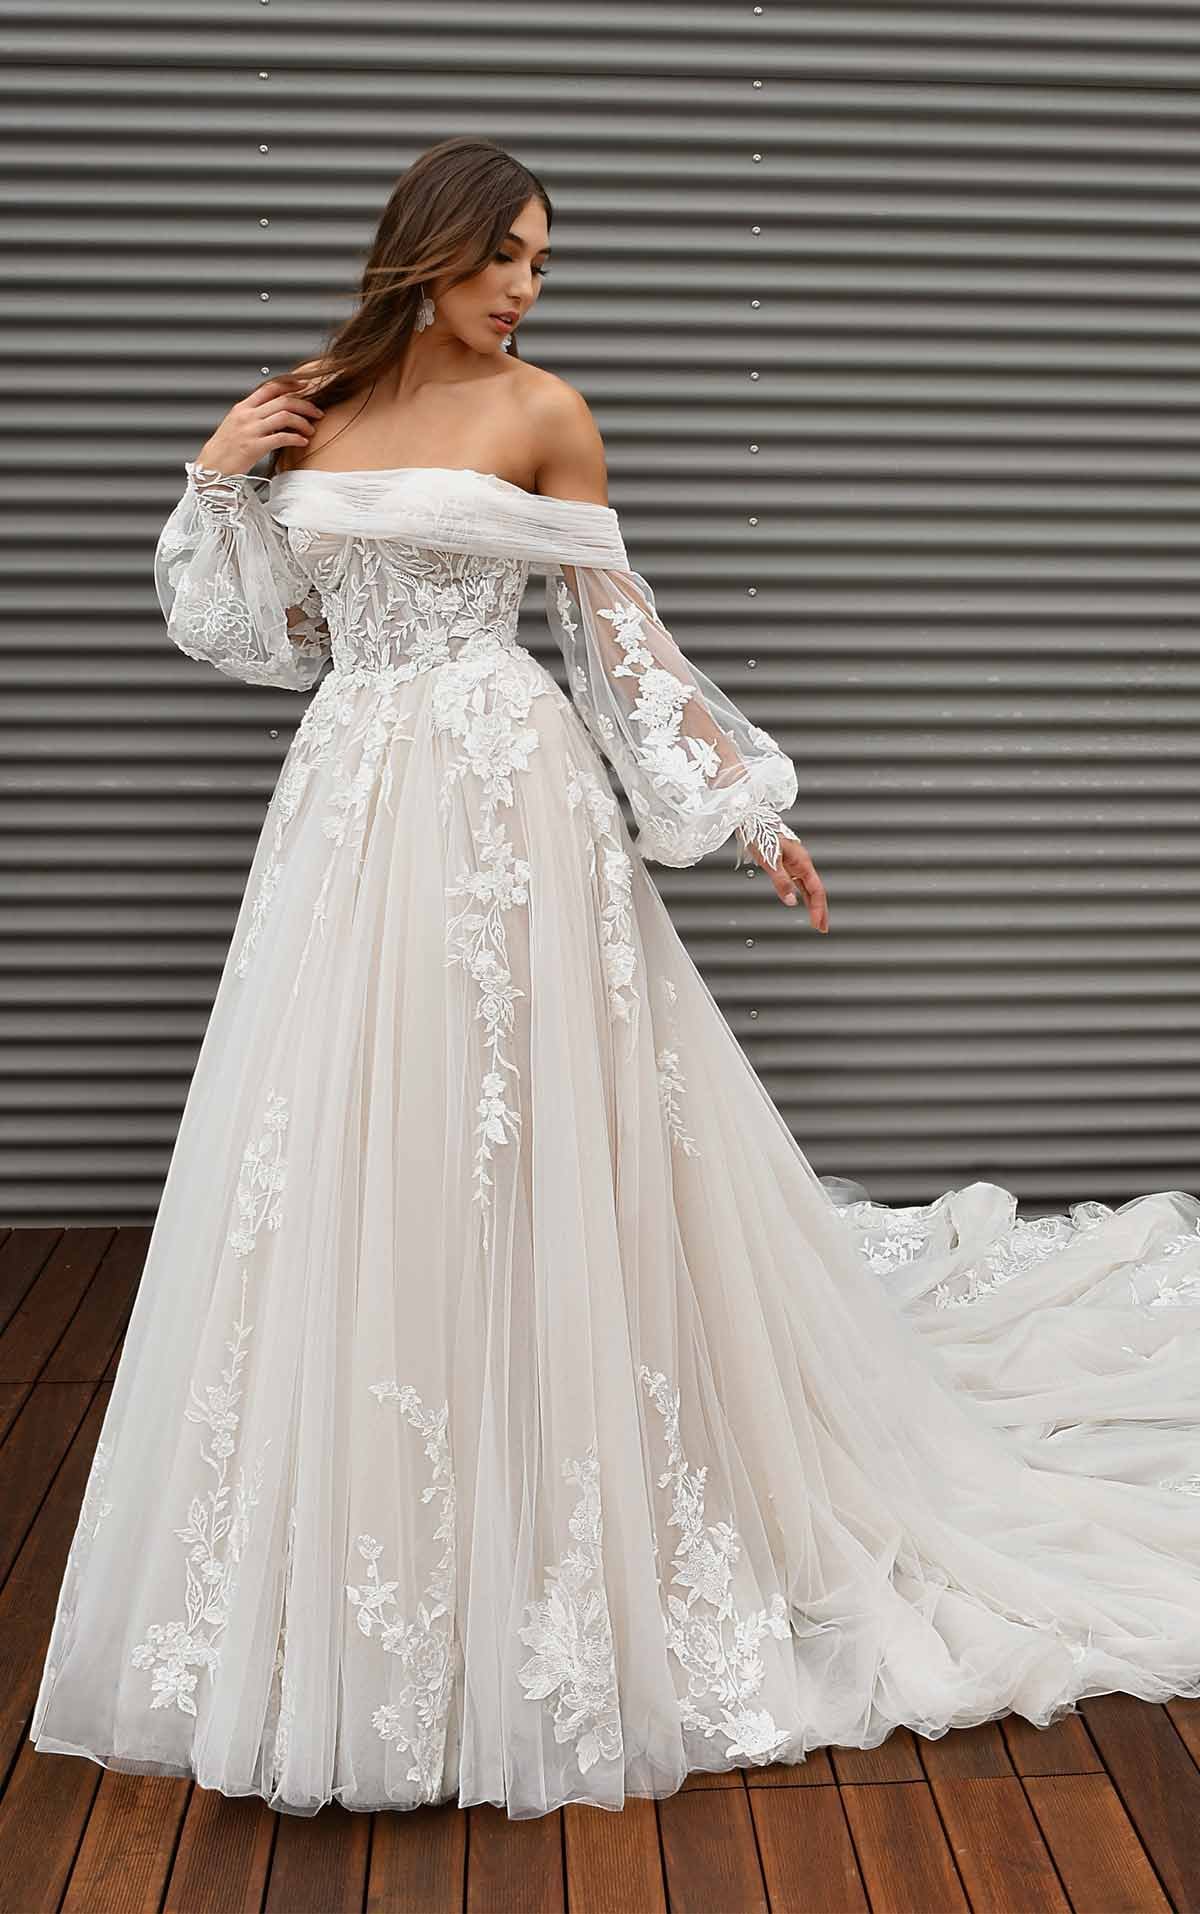 long sleeve wedding dresses,